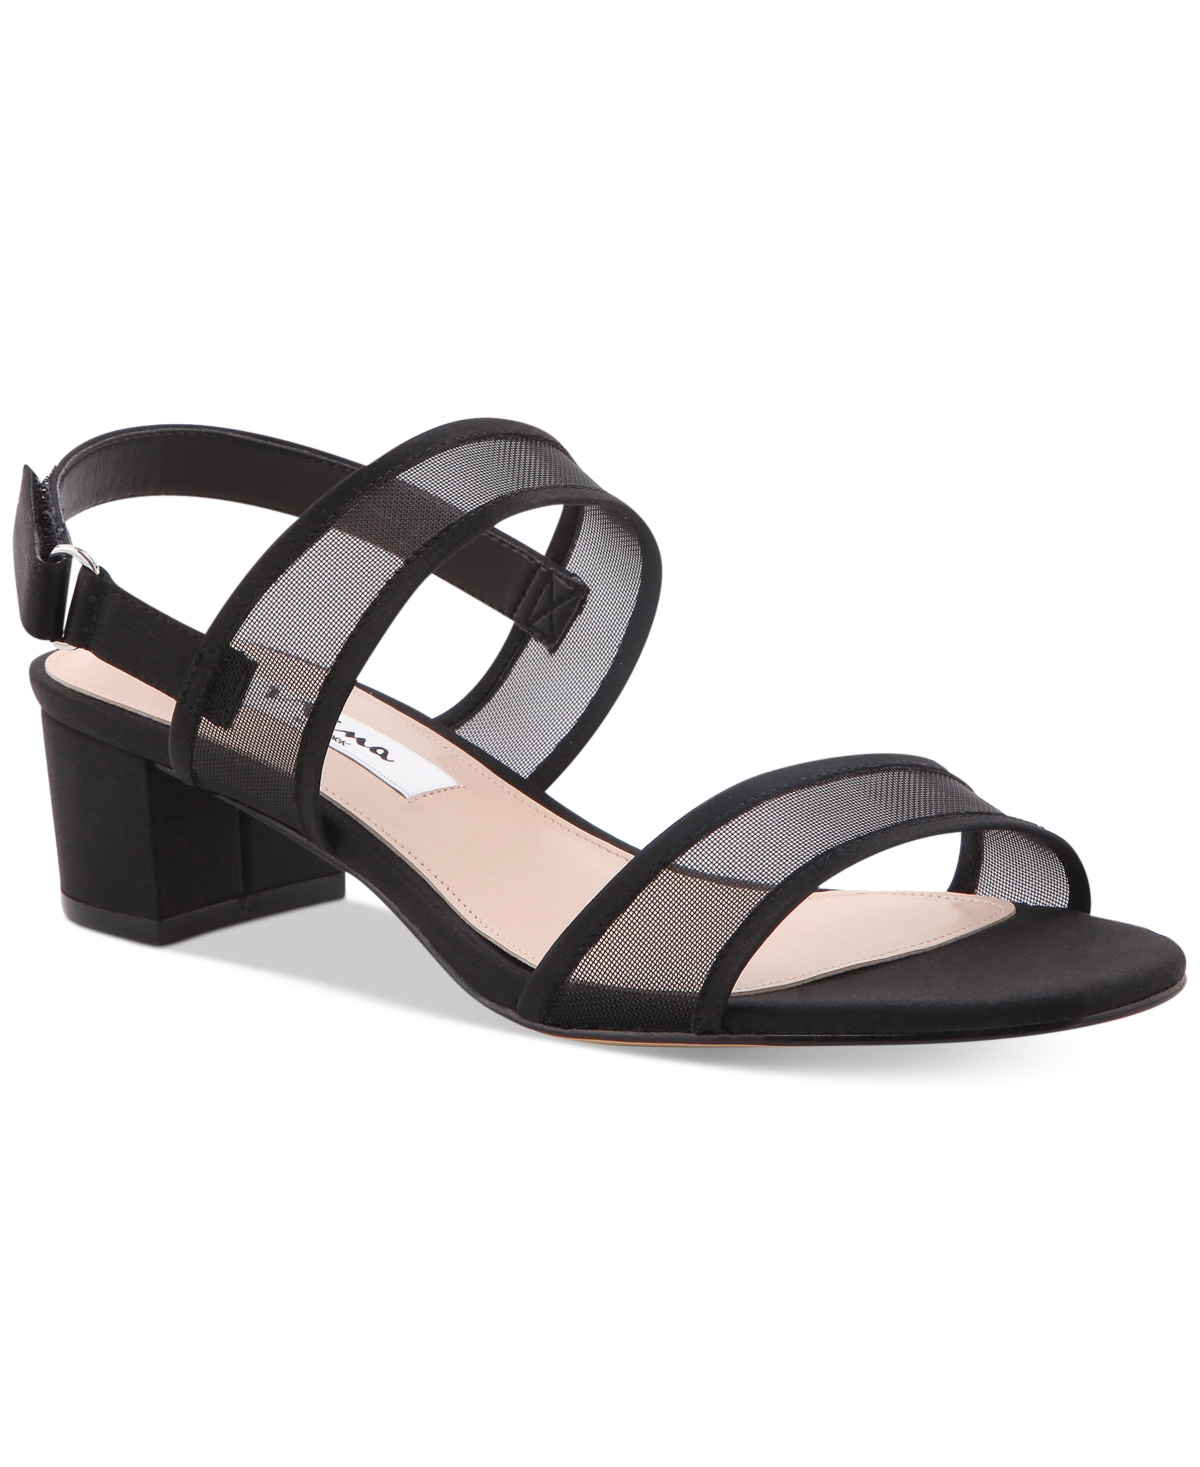 UPC 716142950812 product image for Nina Ganice Block-Heel Evening Sandals Women's Shoes | upcitemdb.com